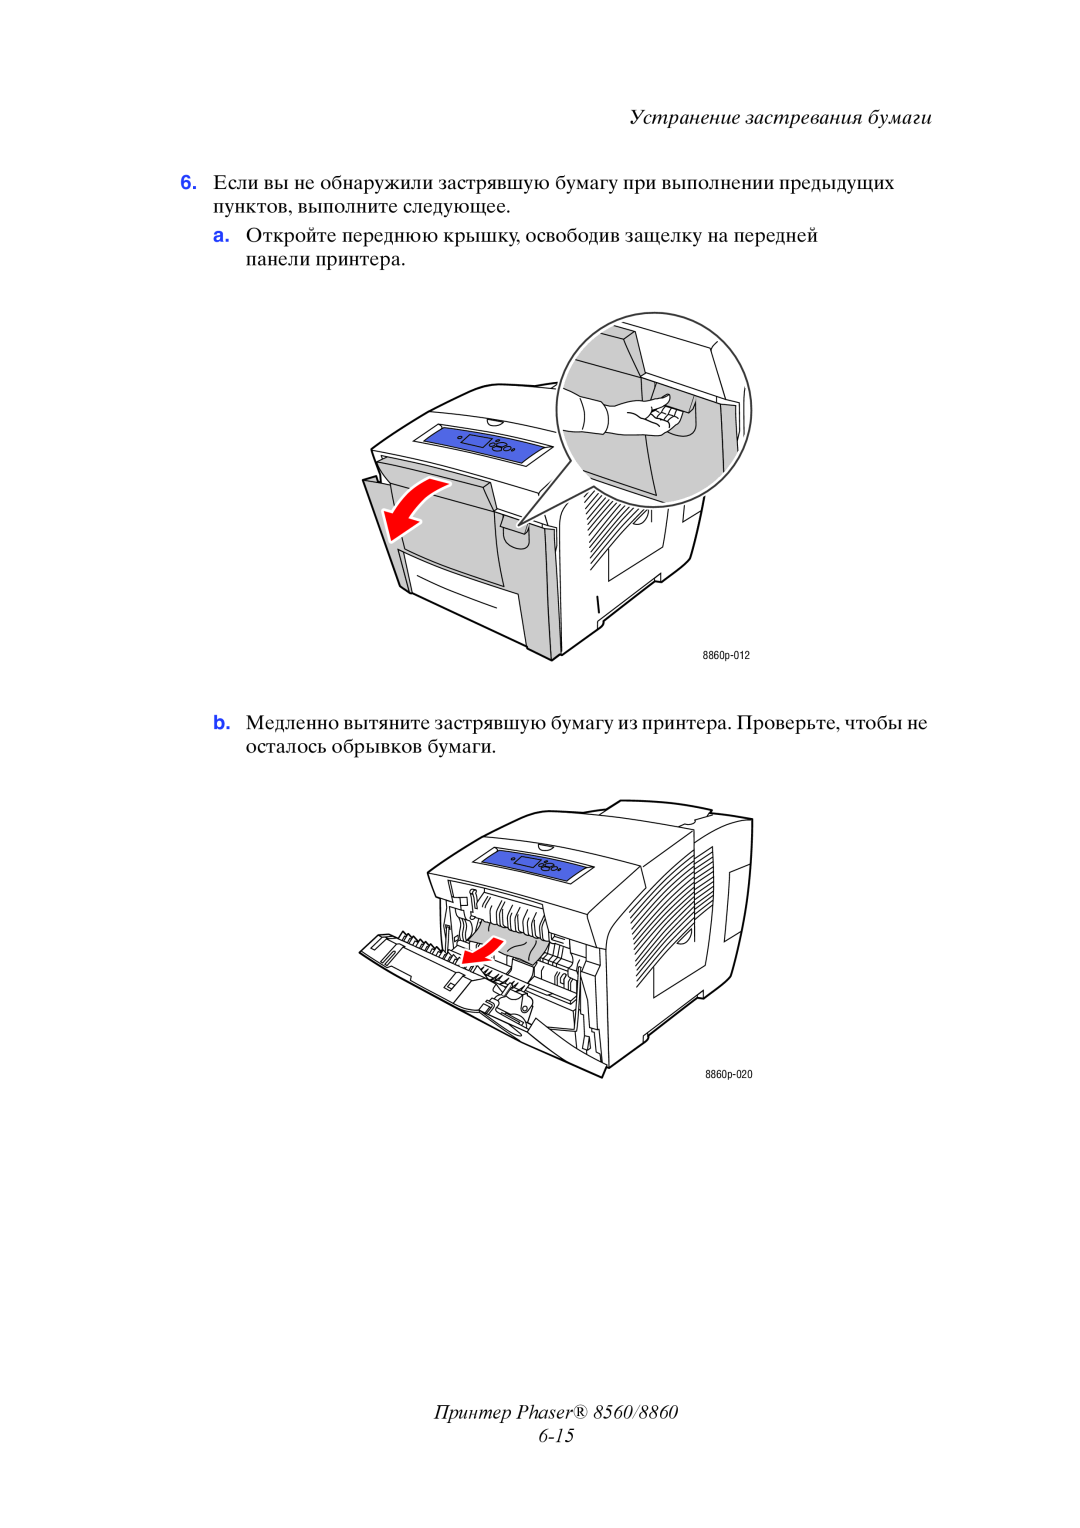 Xerox manual Принтер Phaser 8560/8860 6-15, Устранение застревания бумаги 